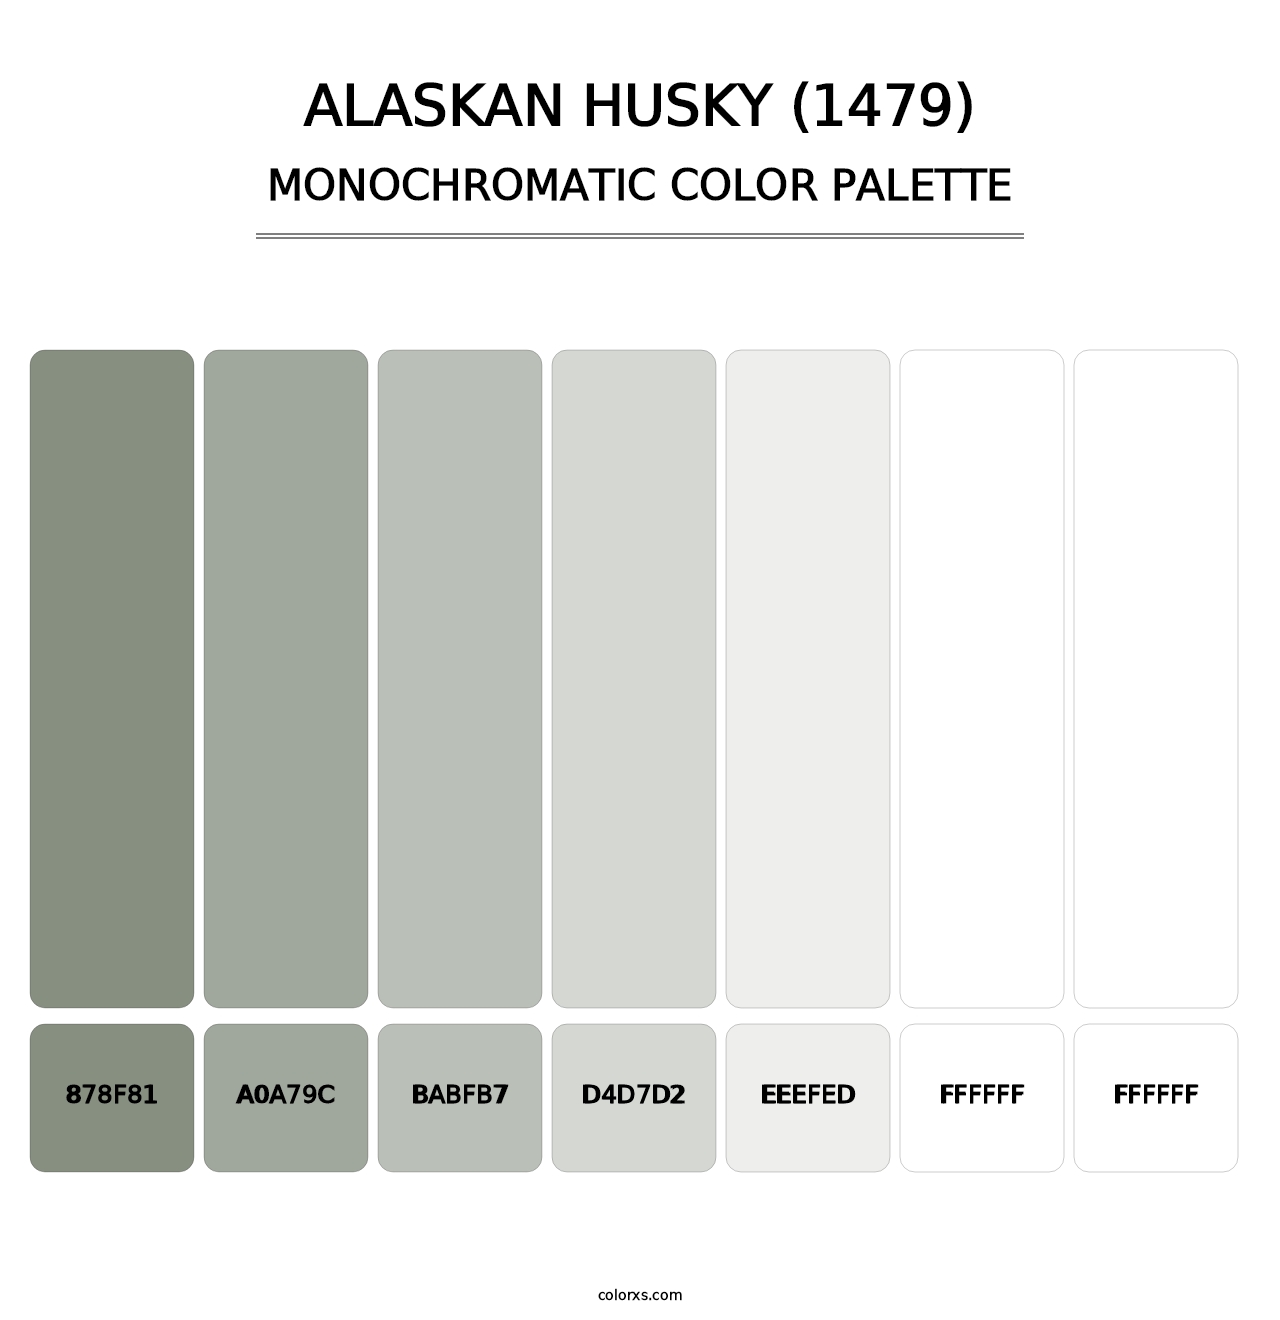 Alaskan Husky (1479) - Monochromatic Color Palette